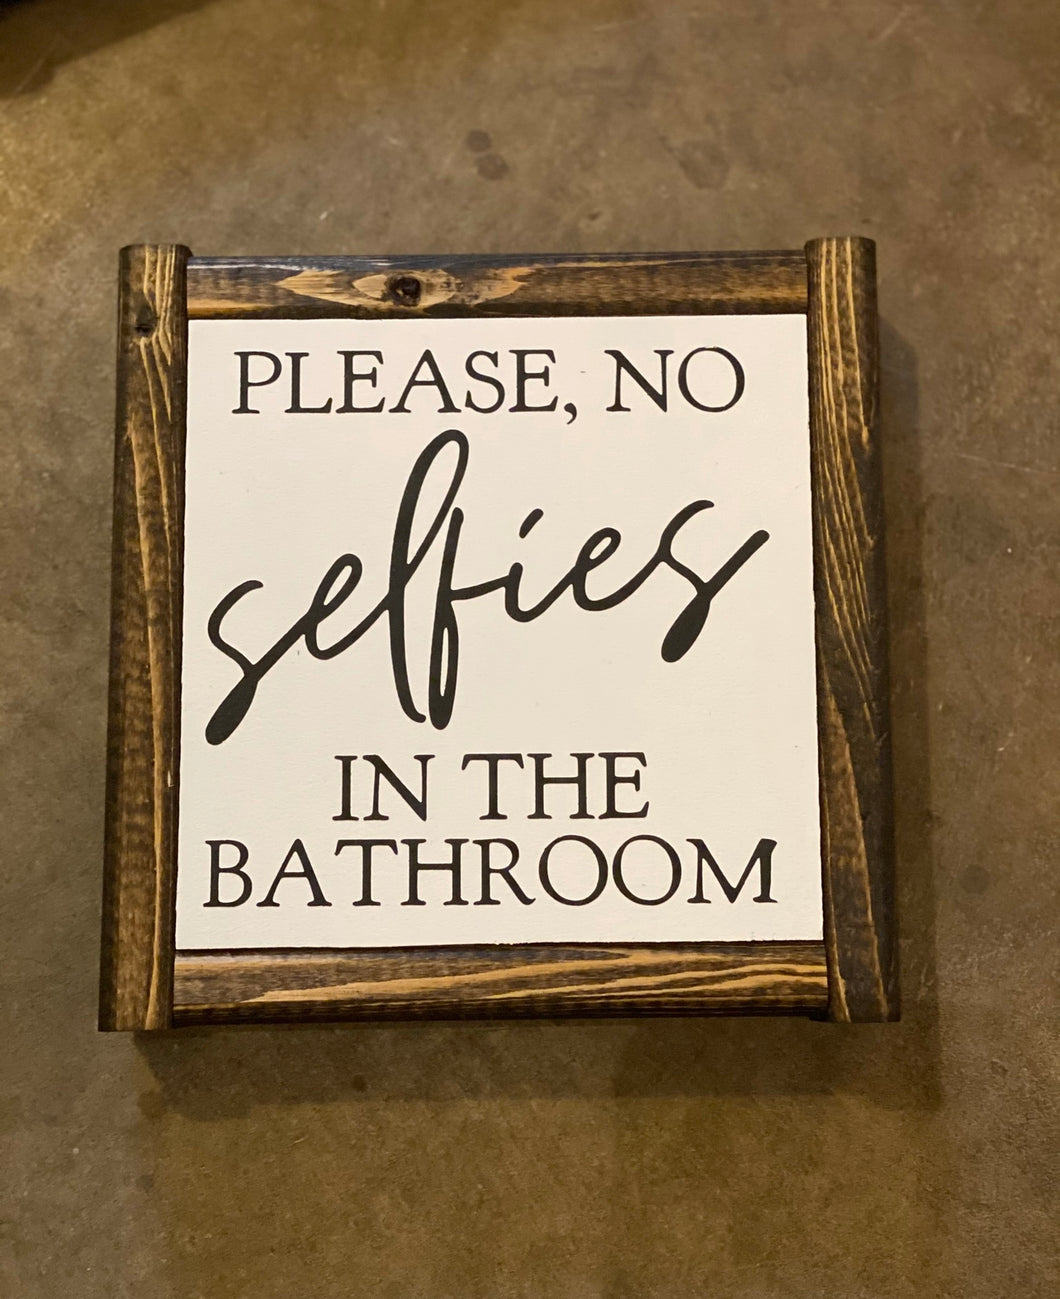 Please no selfies in the bathroom